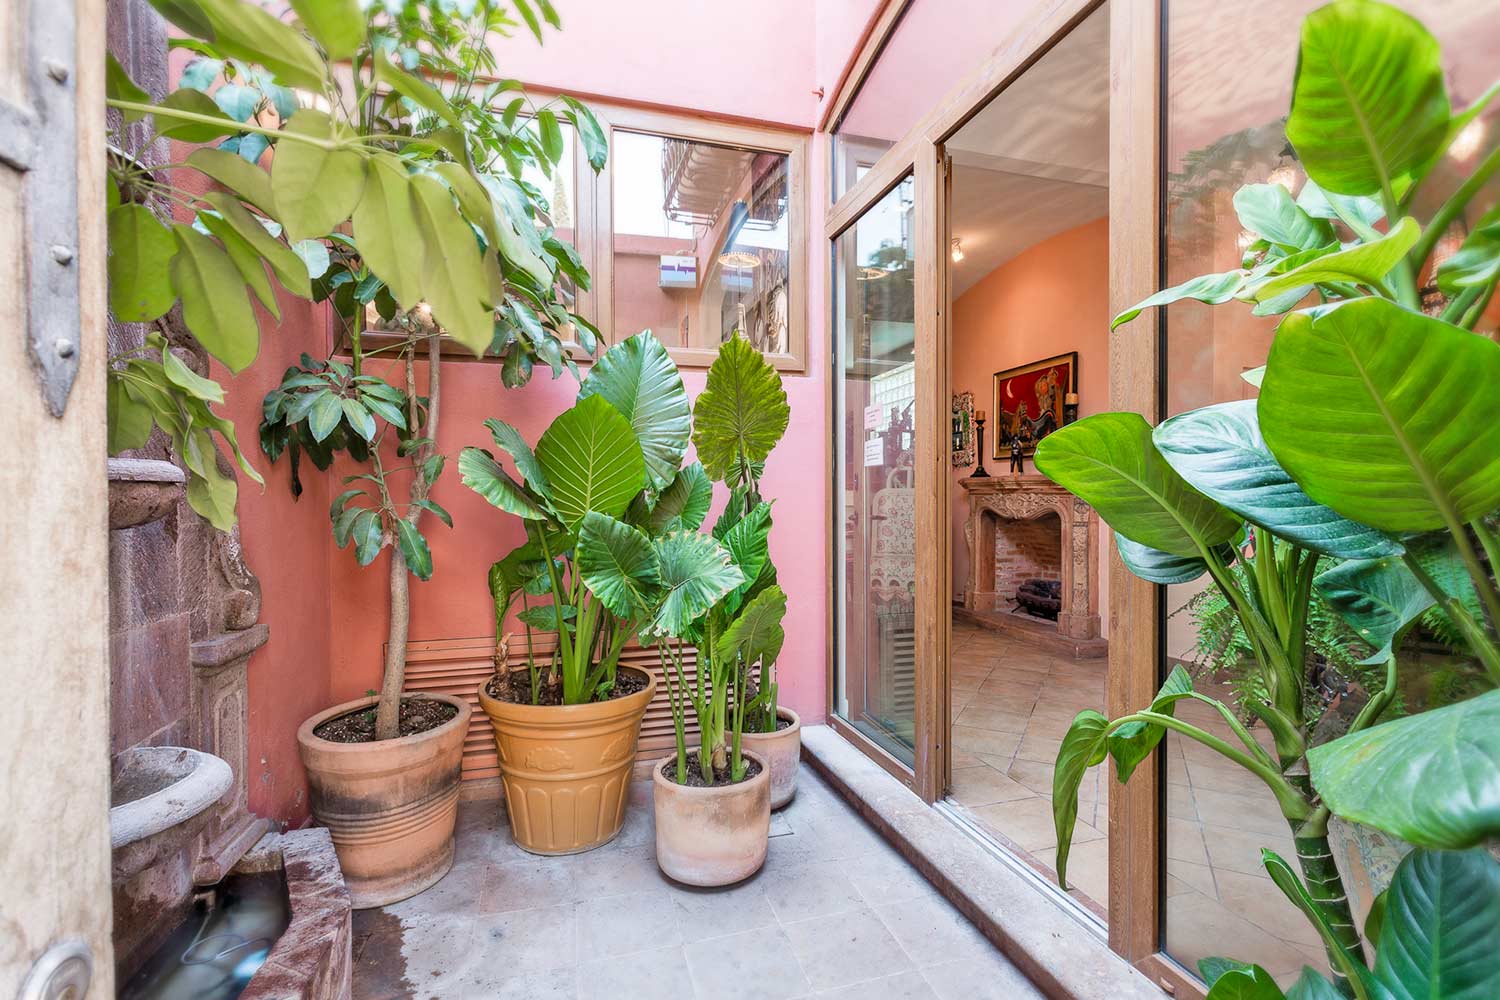 Entry to Casa de la Vista shows a courtyard, stone plants, natural light, and plants.